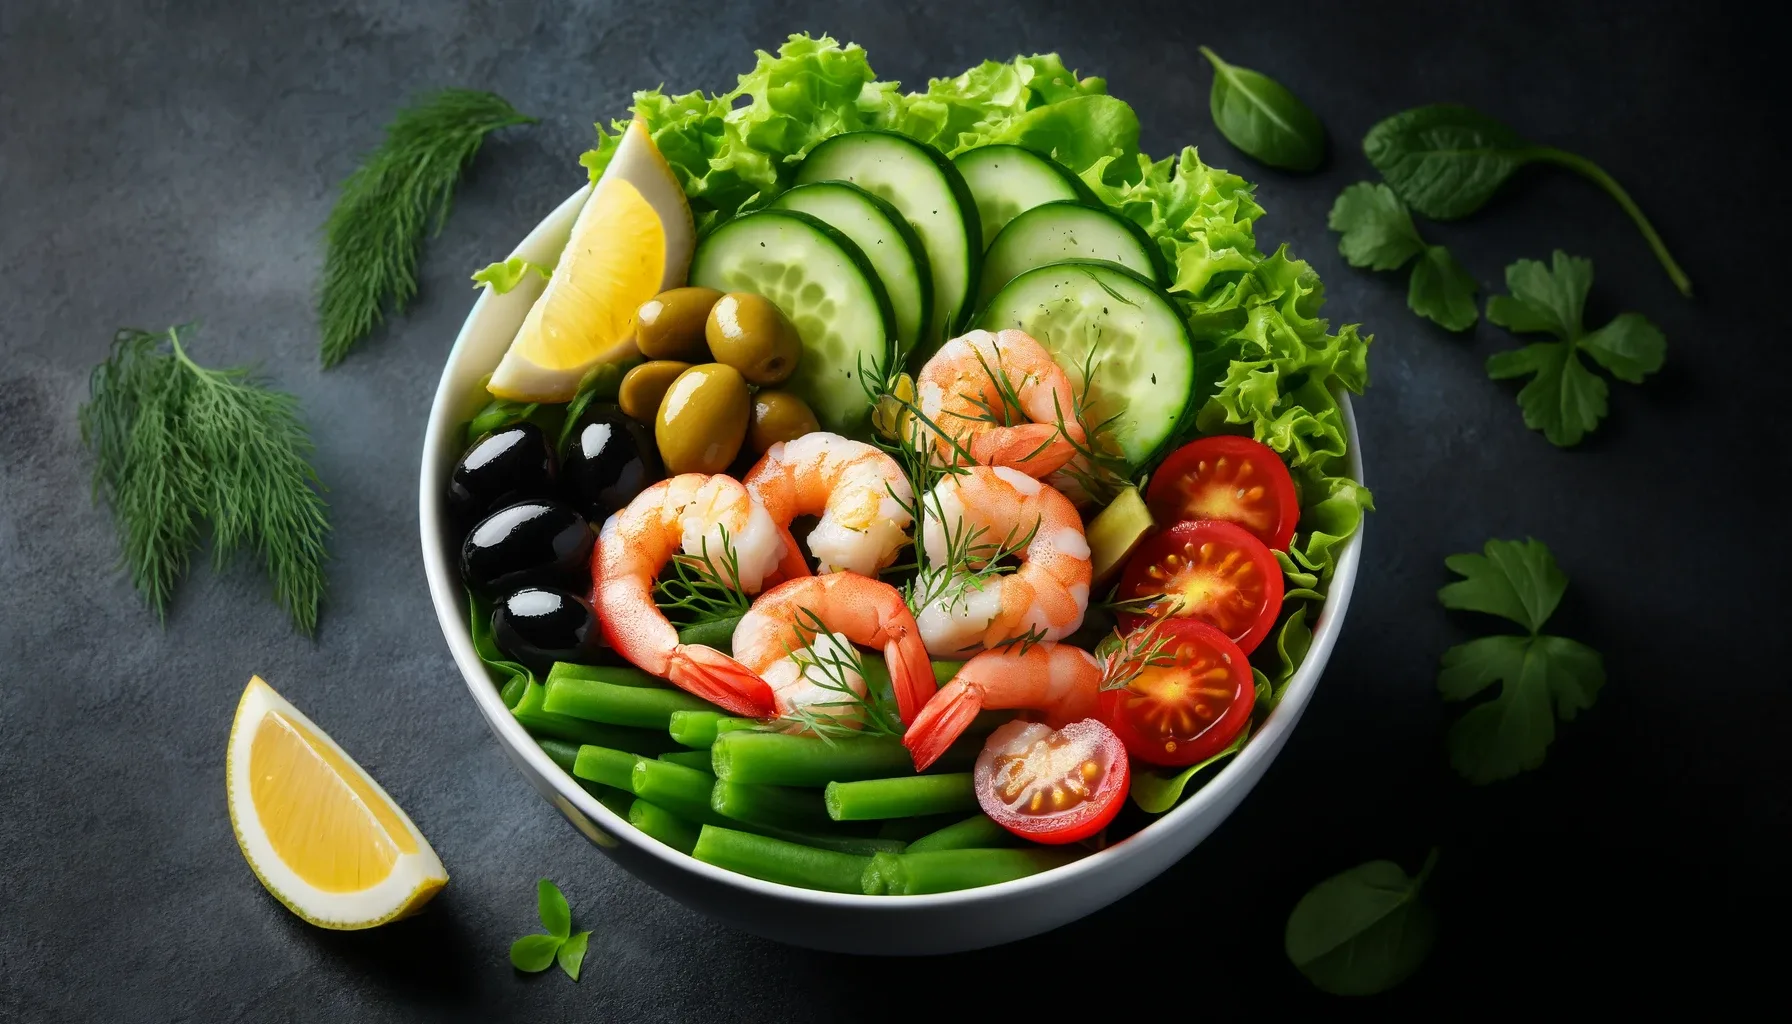 An image of a Mediterranean diet salad, composed of shrimp, olives and other fresh vegetables.